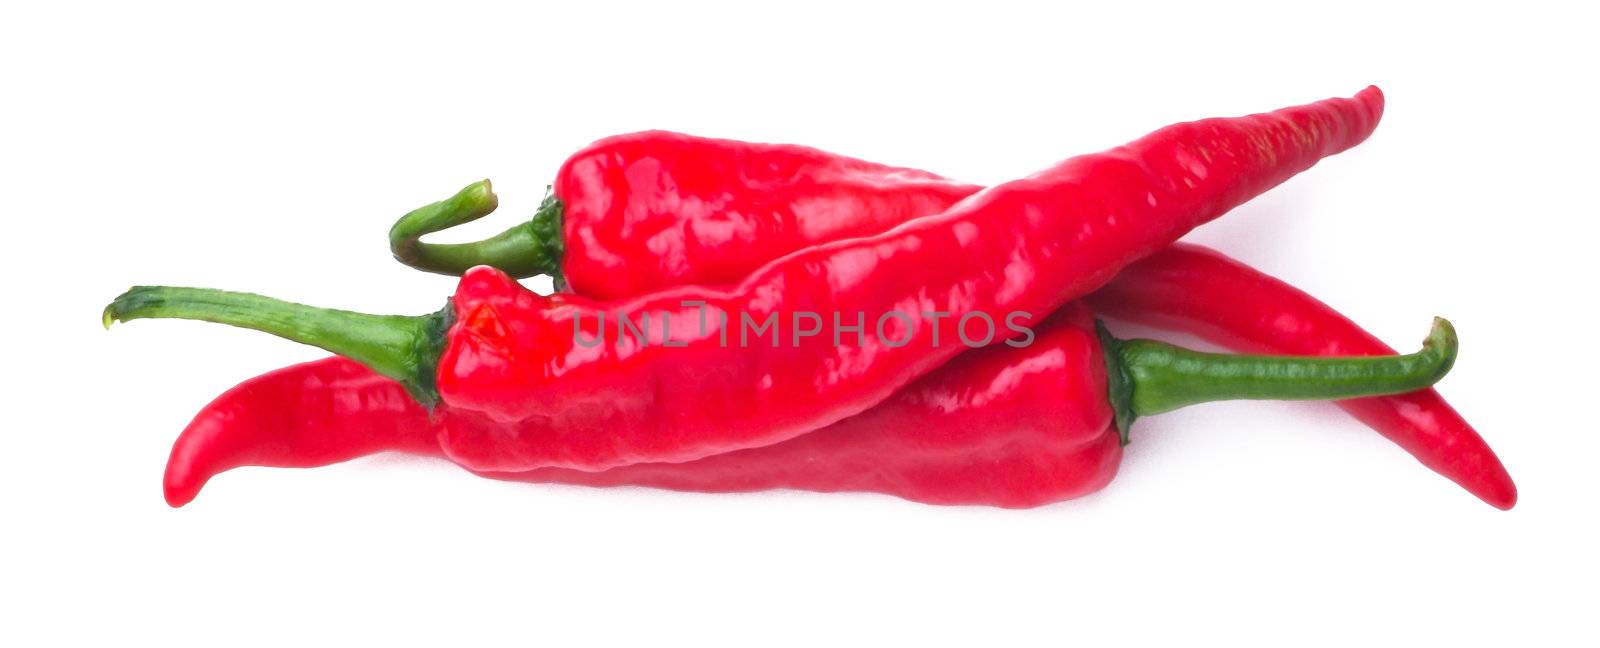 Chili. Red hot chili pepper